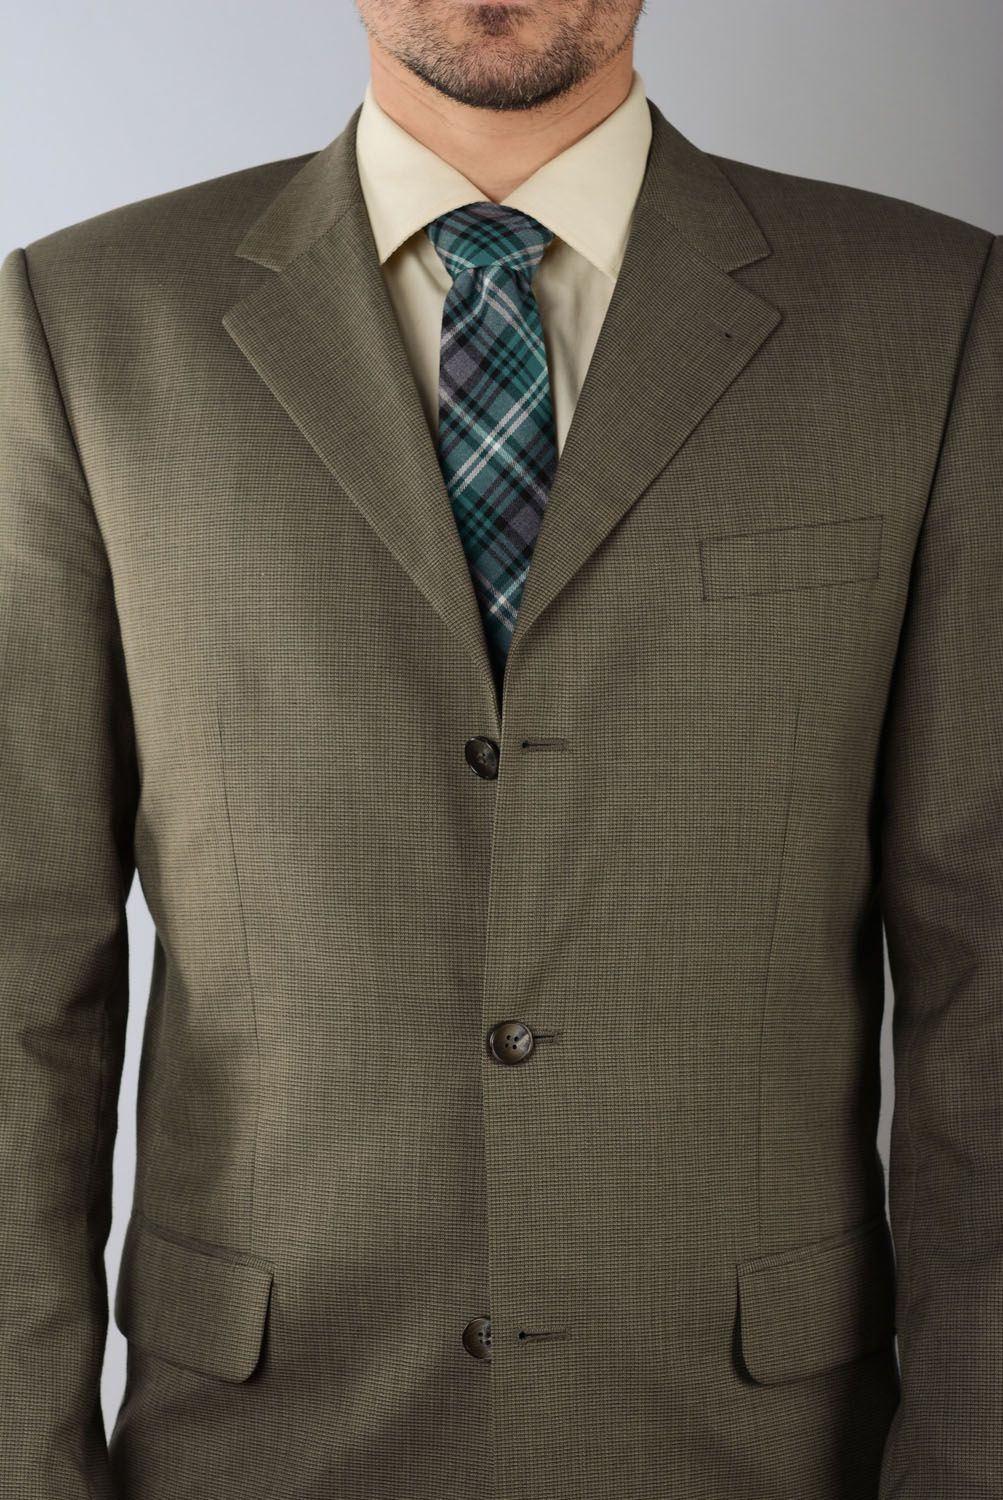 Cravate en tweed de costume faite main photo 4